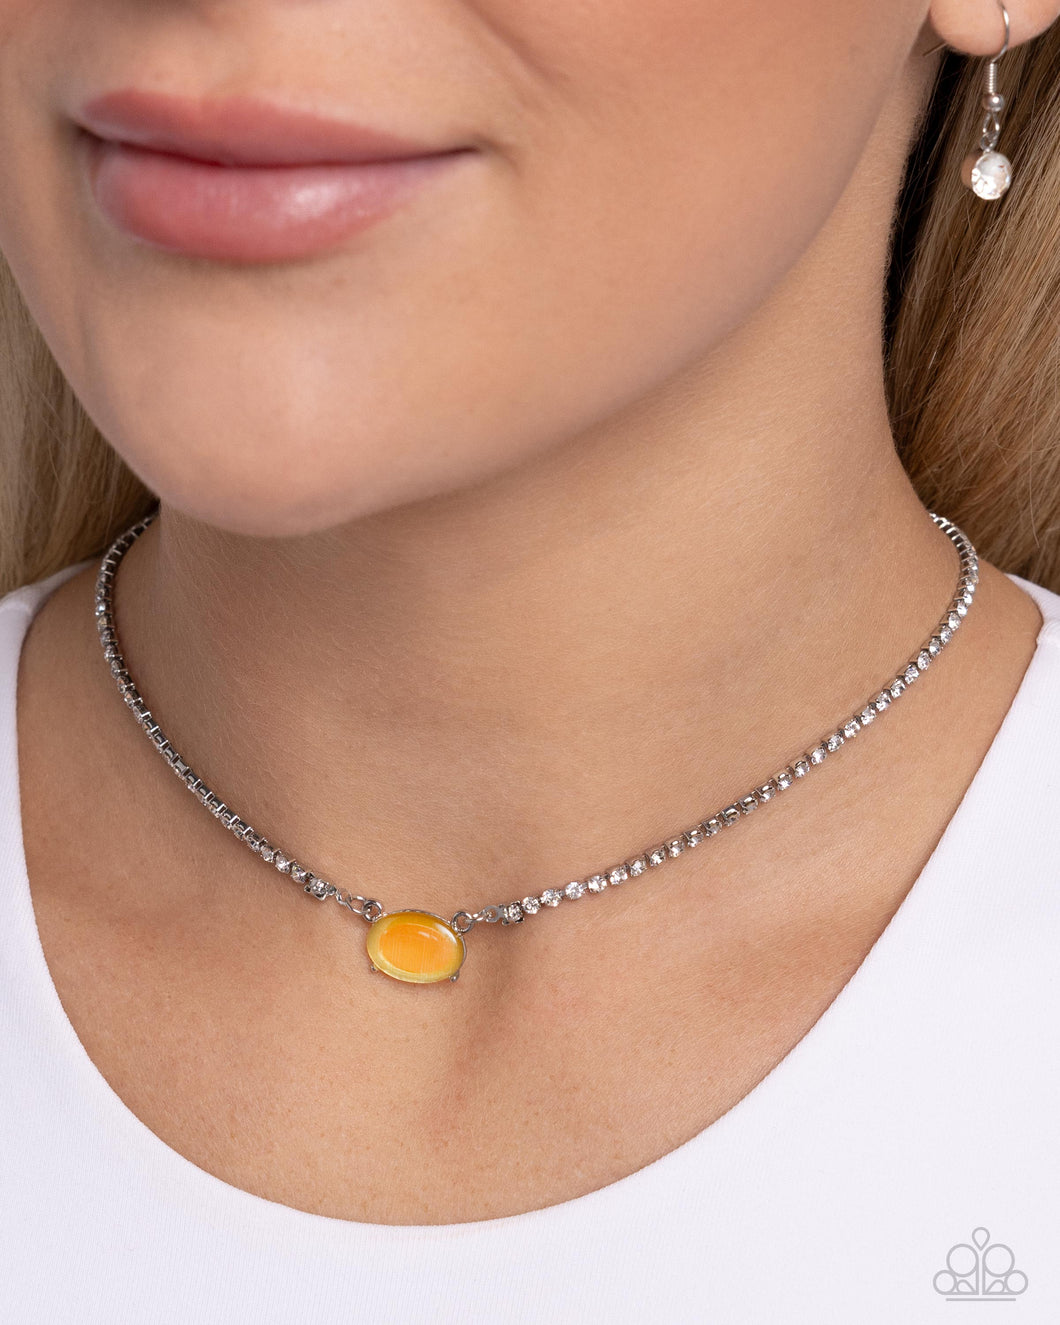 Paparazzi “Dynamic Delicacy” Yellow Choker Necklace Earring Set